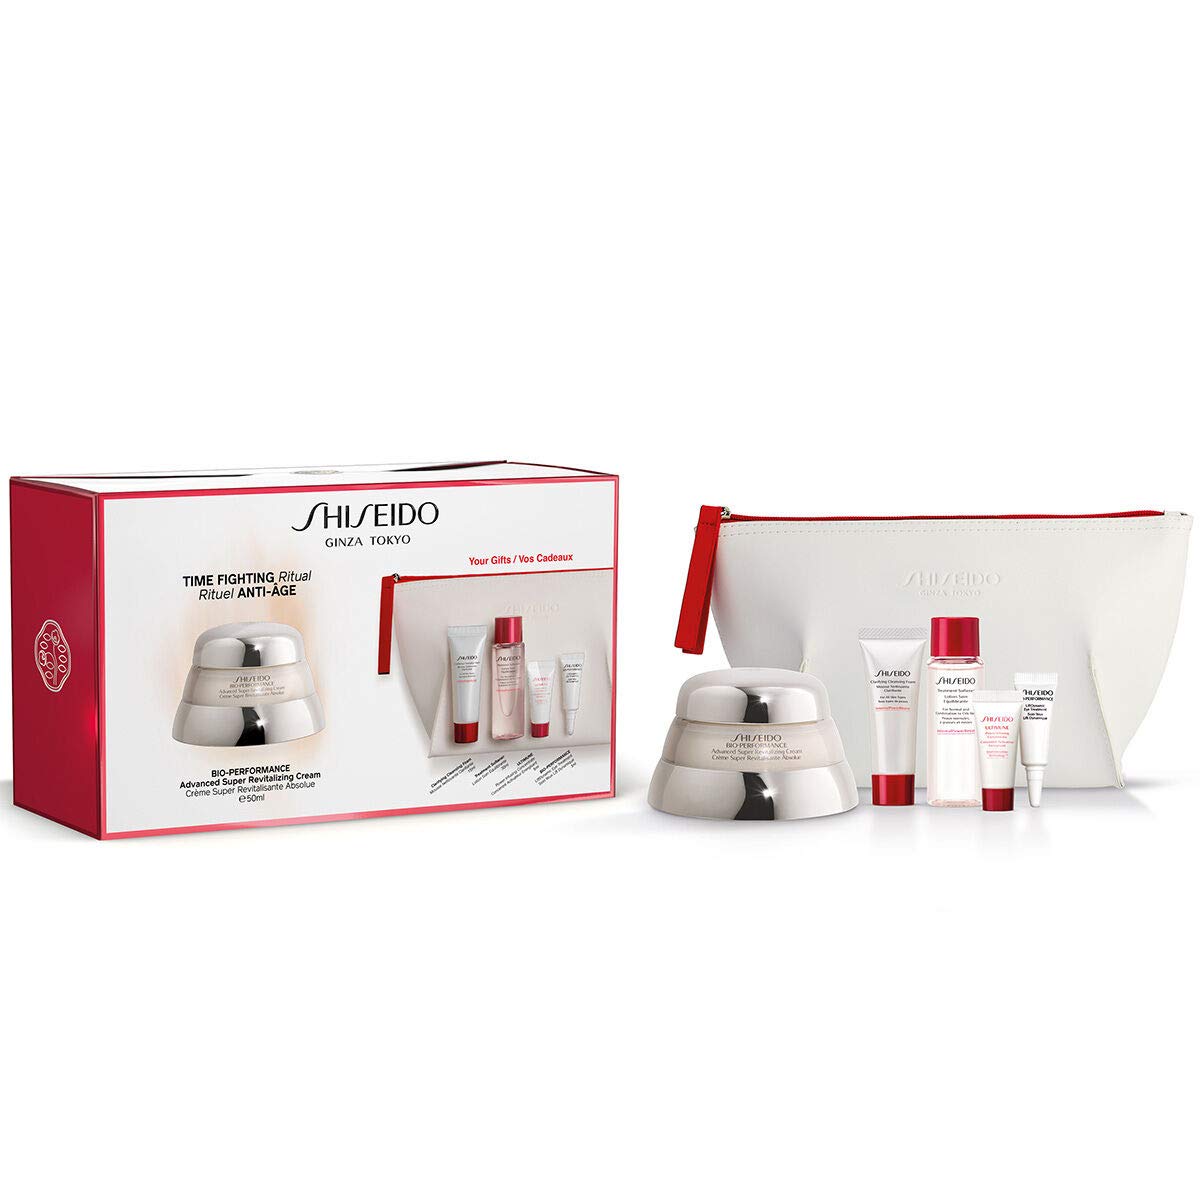 Shiseido Gift set Advanced Super Revitalizing Cream 50 ml + Clarifying Cleansing Foam 15 ml + Treatment Softener 30 ml + Ultimune Power Infusing Concentrate 5 ml + LiftDynamic Eye Treatment 3 ml